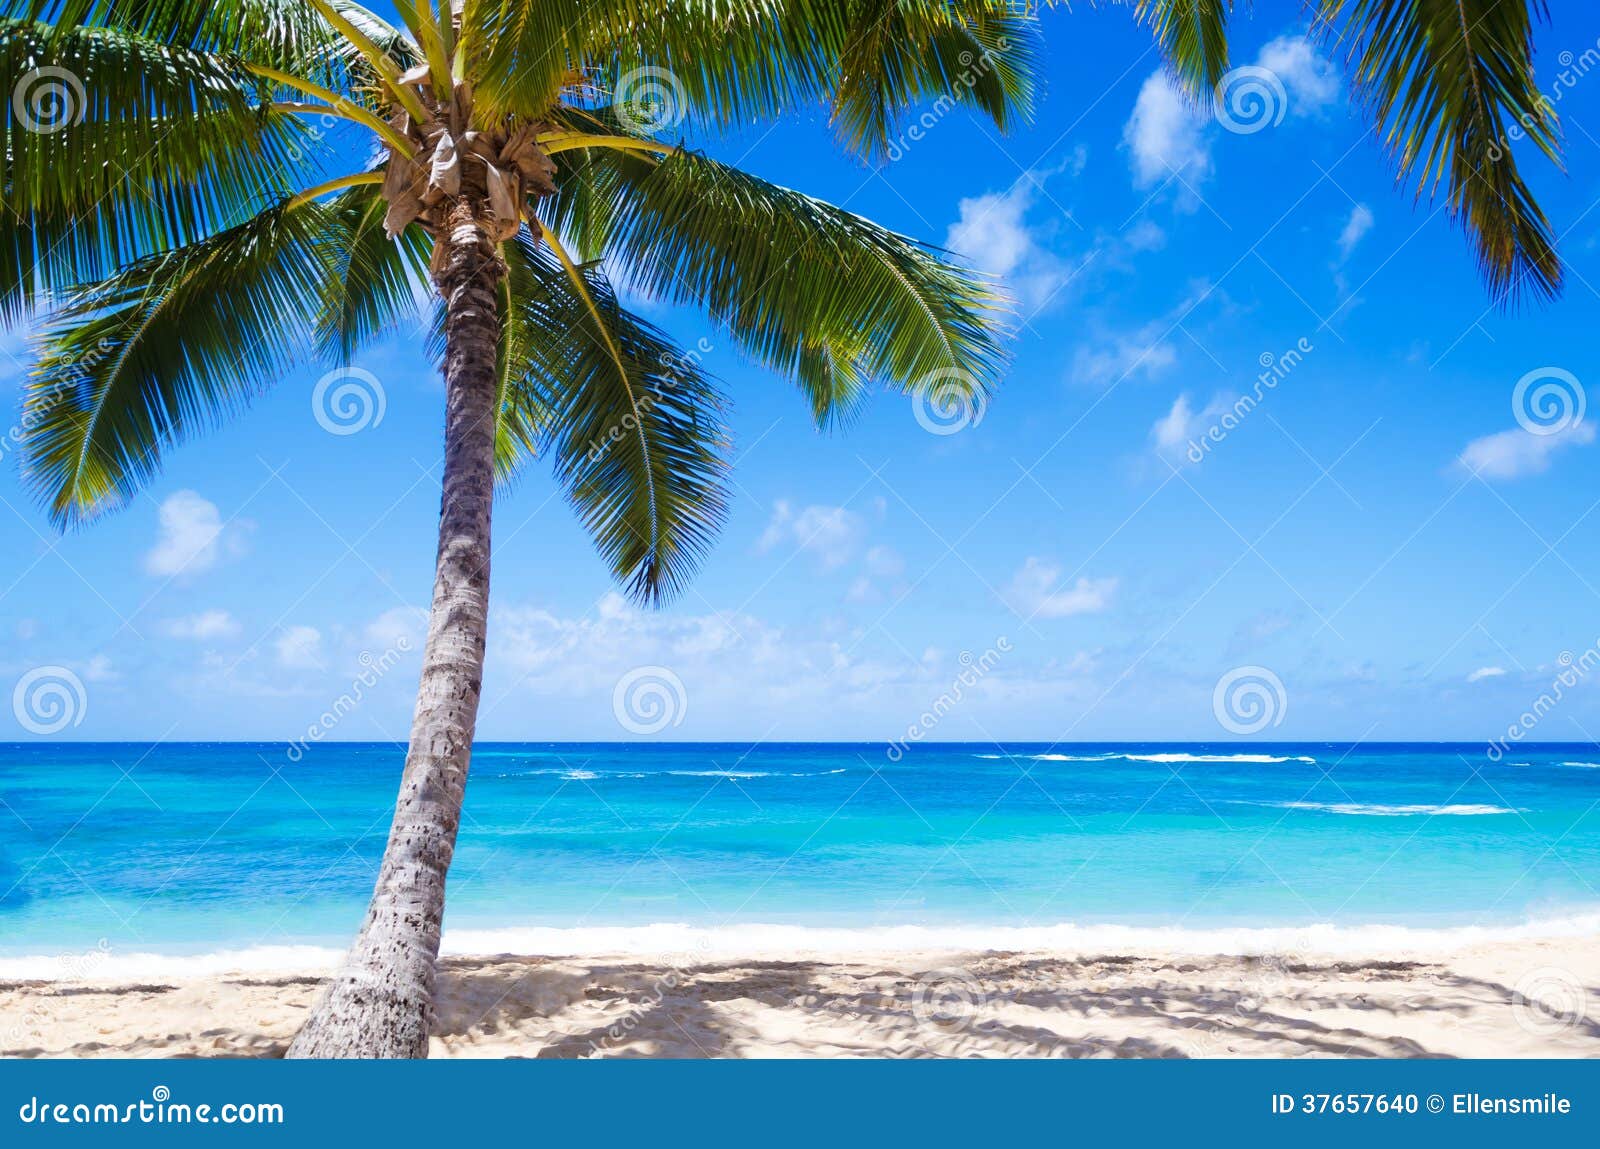 26,808 Hawaii Palm Tree Beach Photos - Free & Royalty-Free Stock 